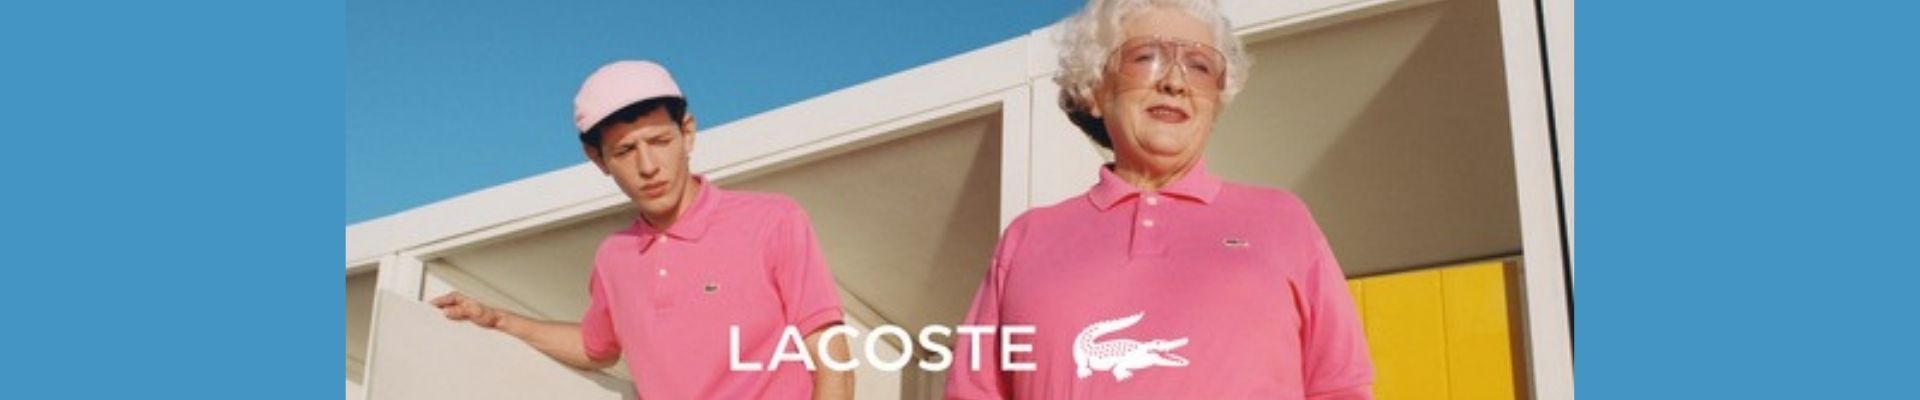 Lacoste apresenta campanha inspirada na diversidade da comunidade Lacoste